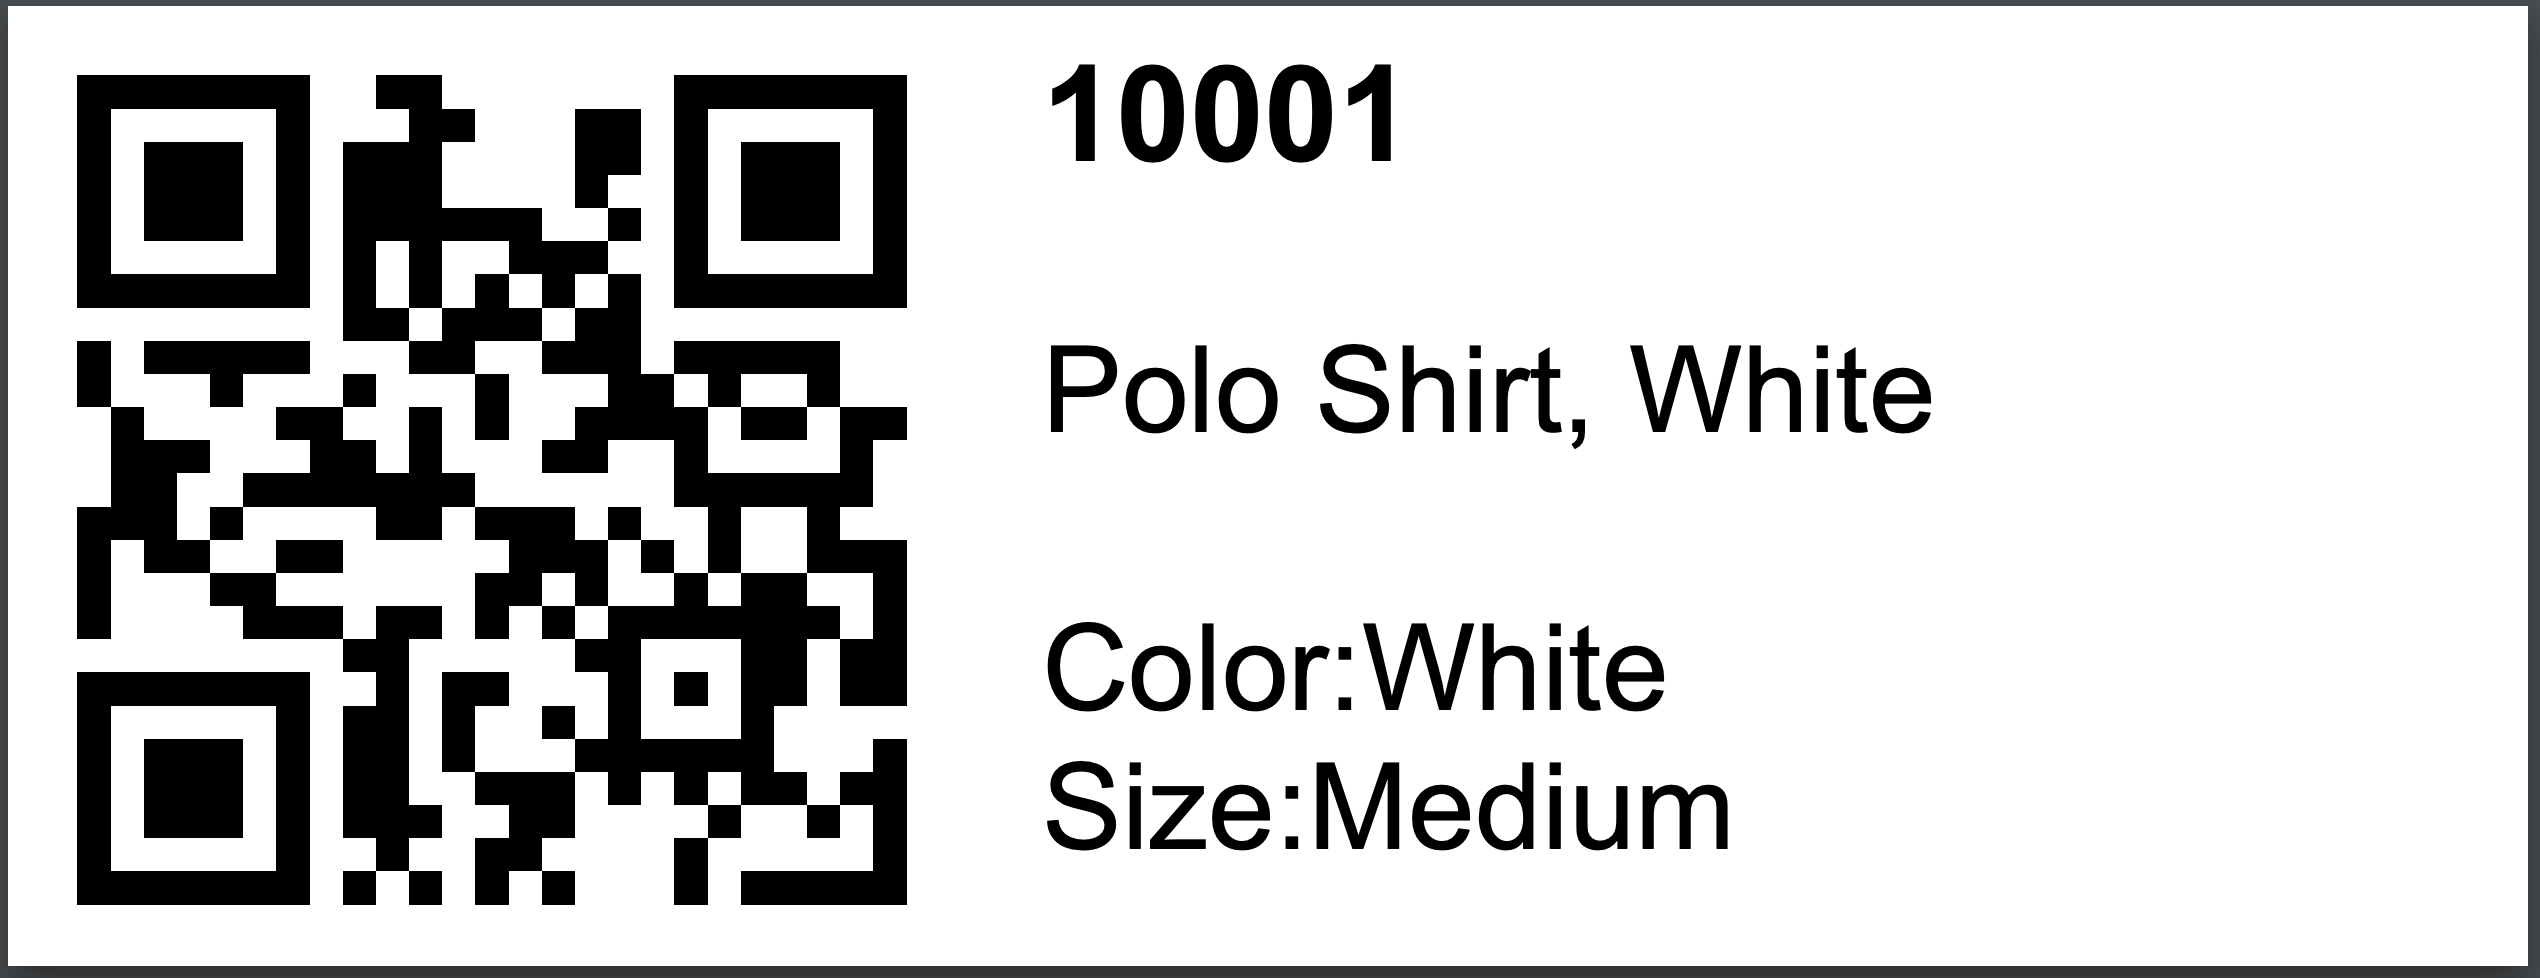 Custom QR Code Label Creation, Design, and Printing